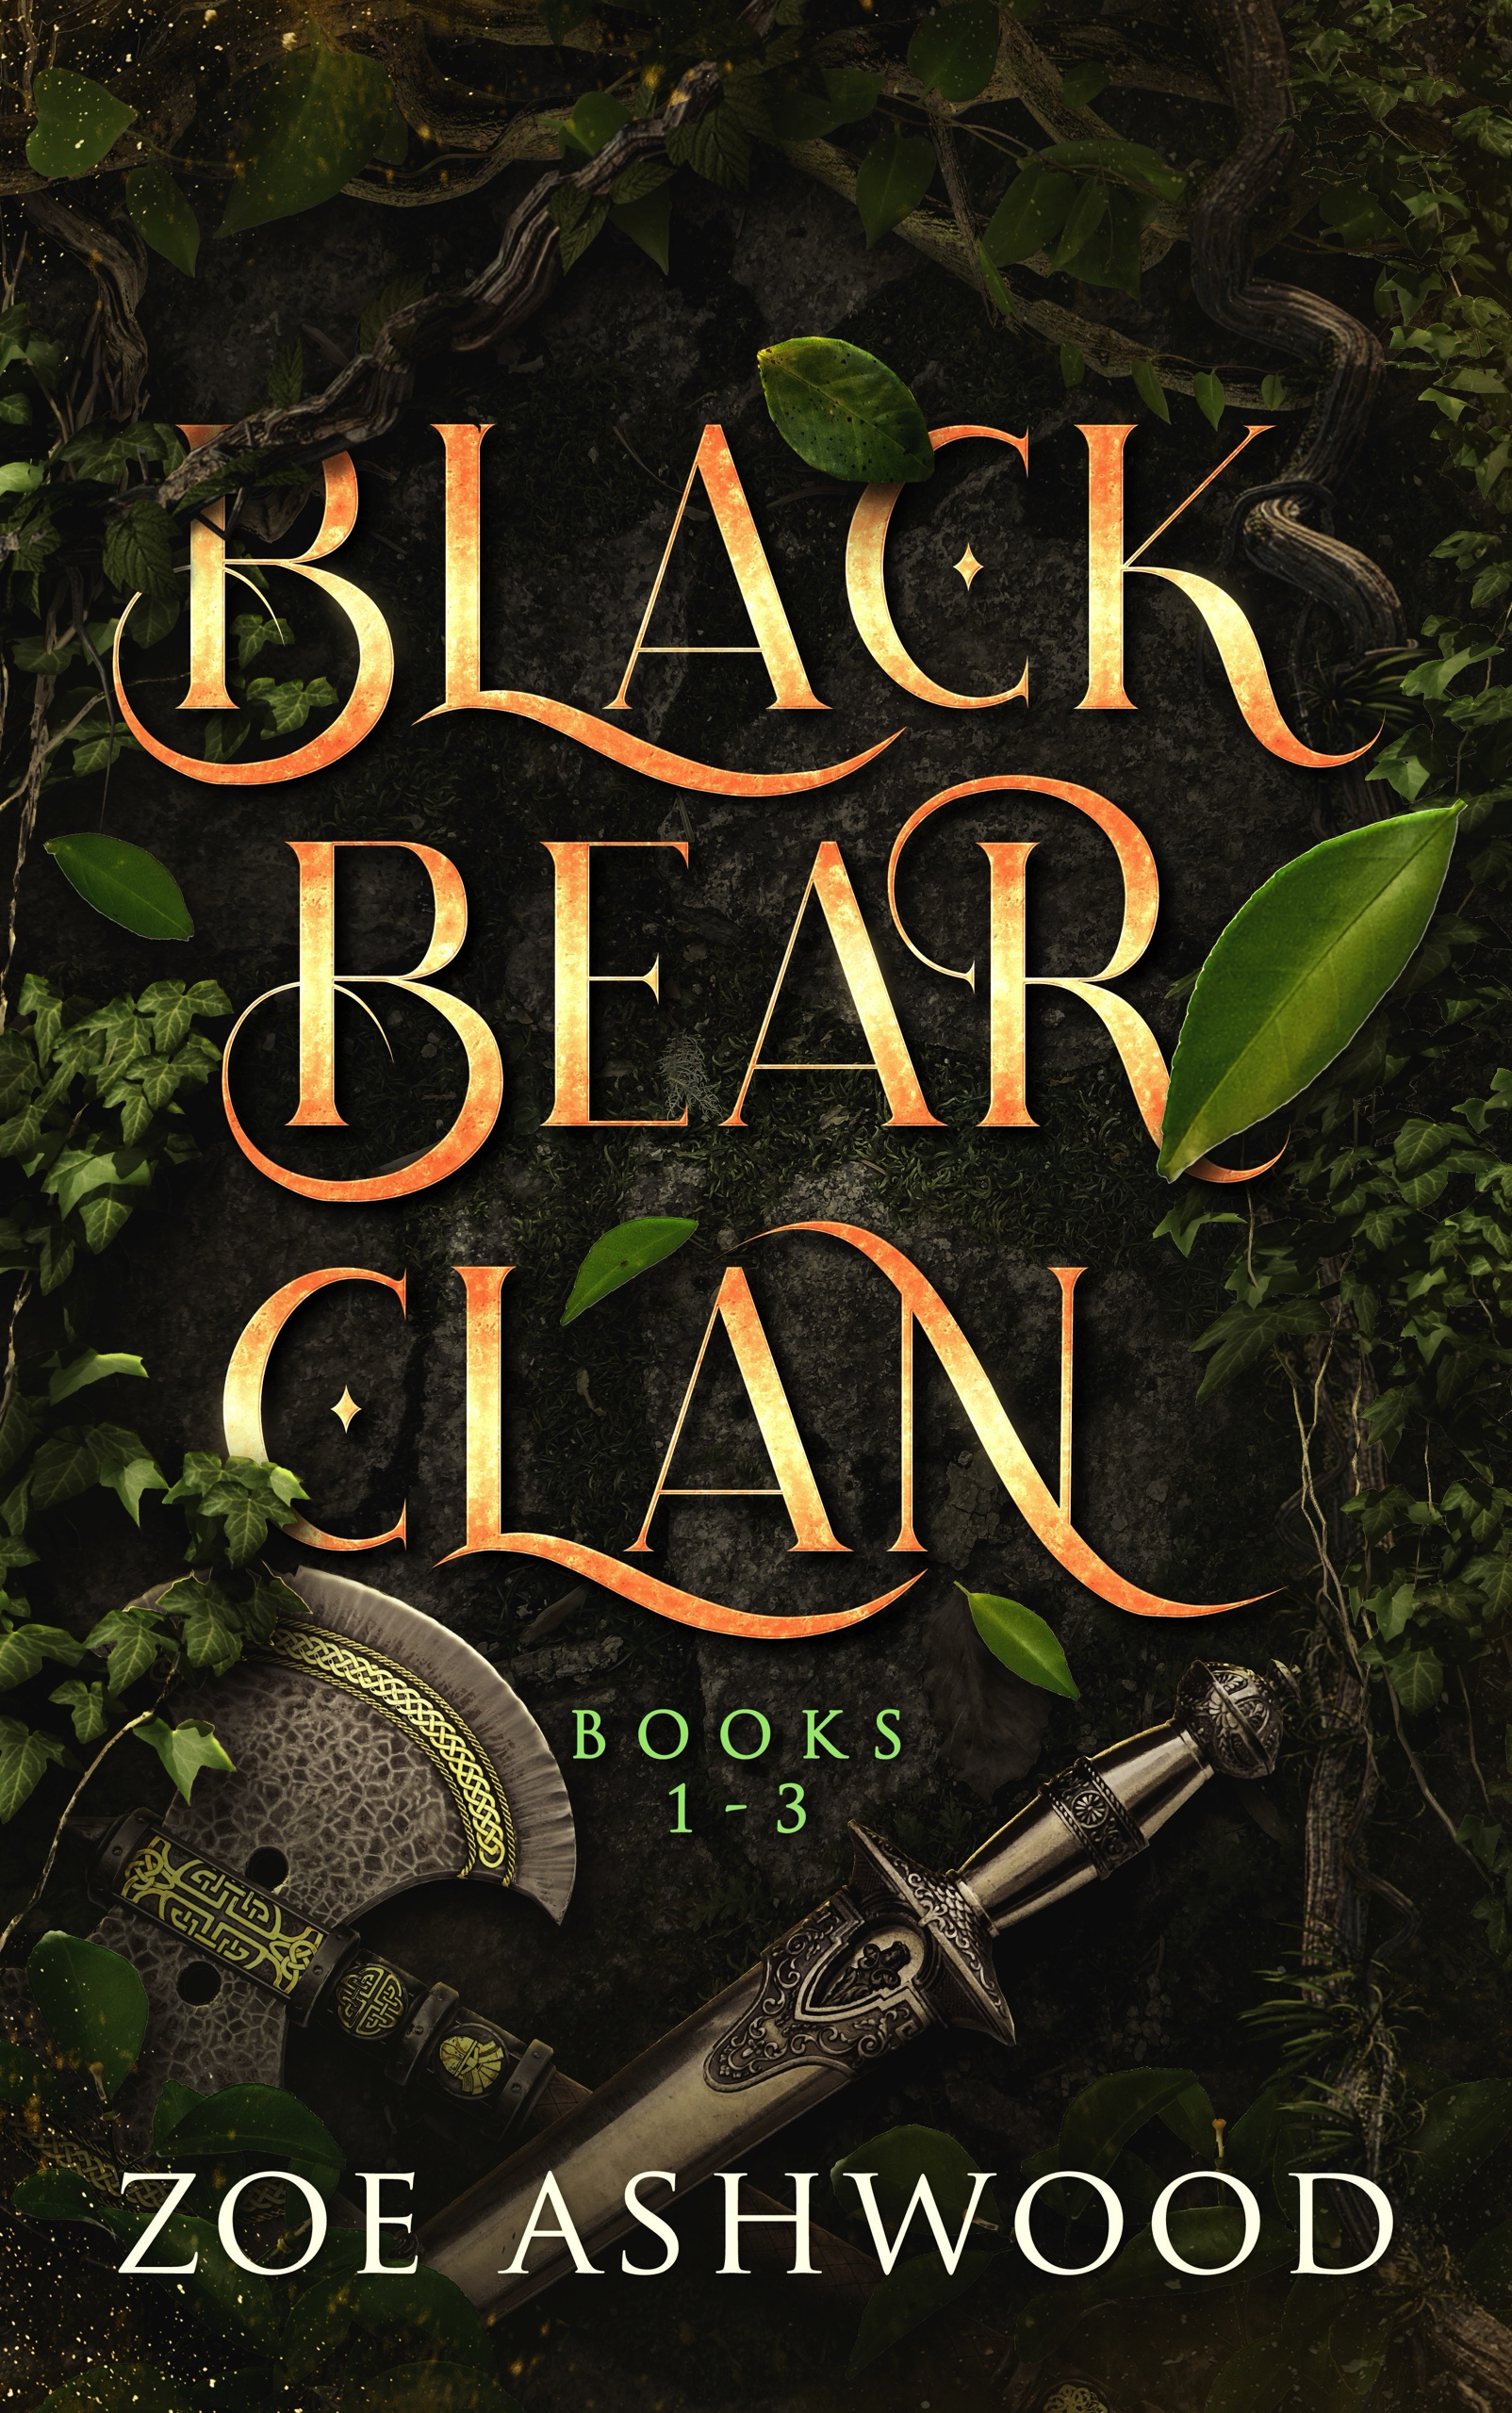 The Black Bear Clan Box Set - Books 1-3 by Zoe Ashwood